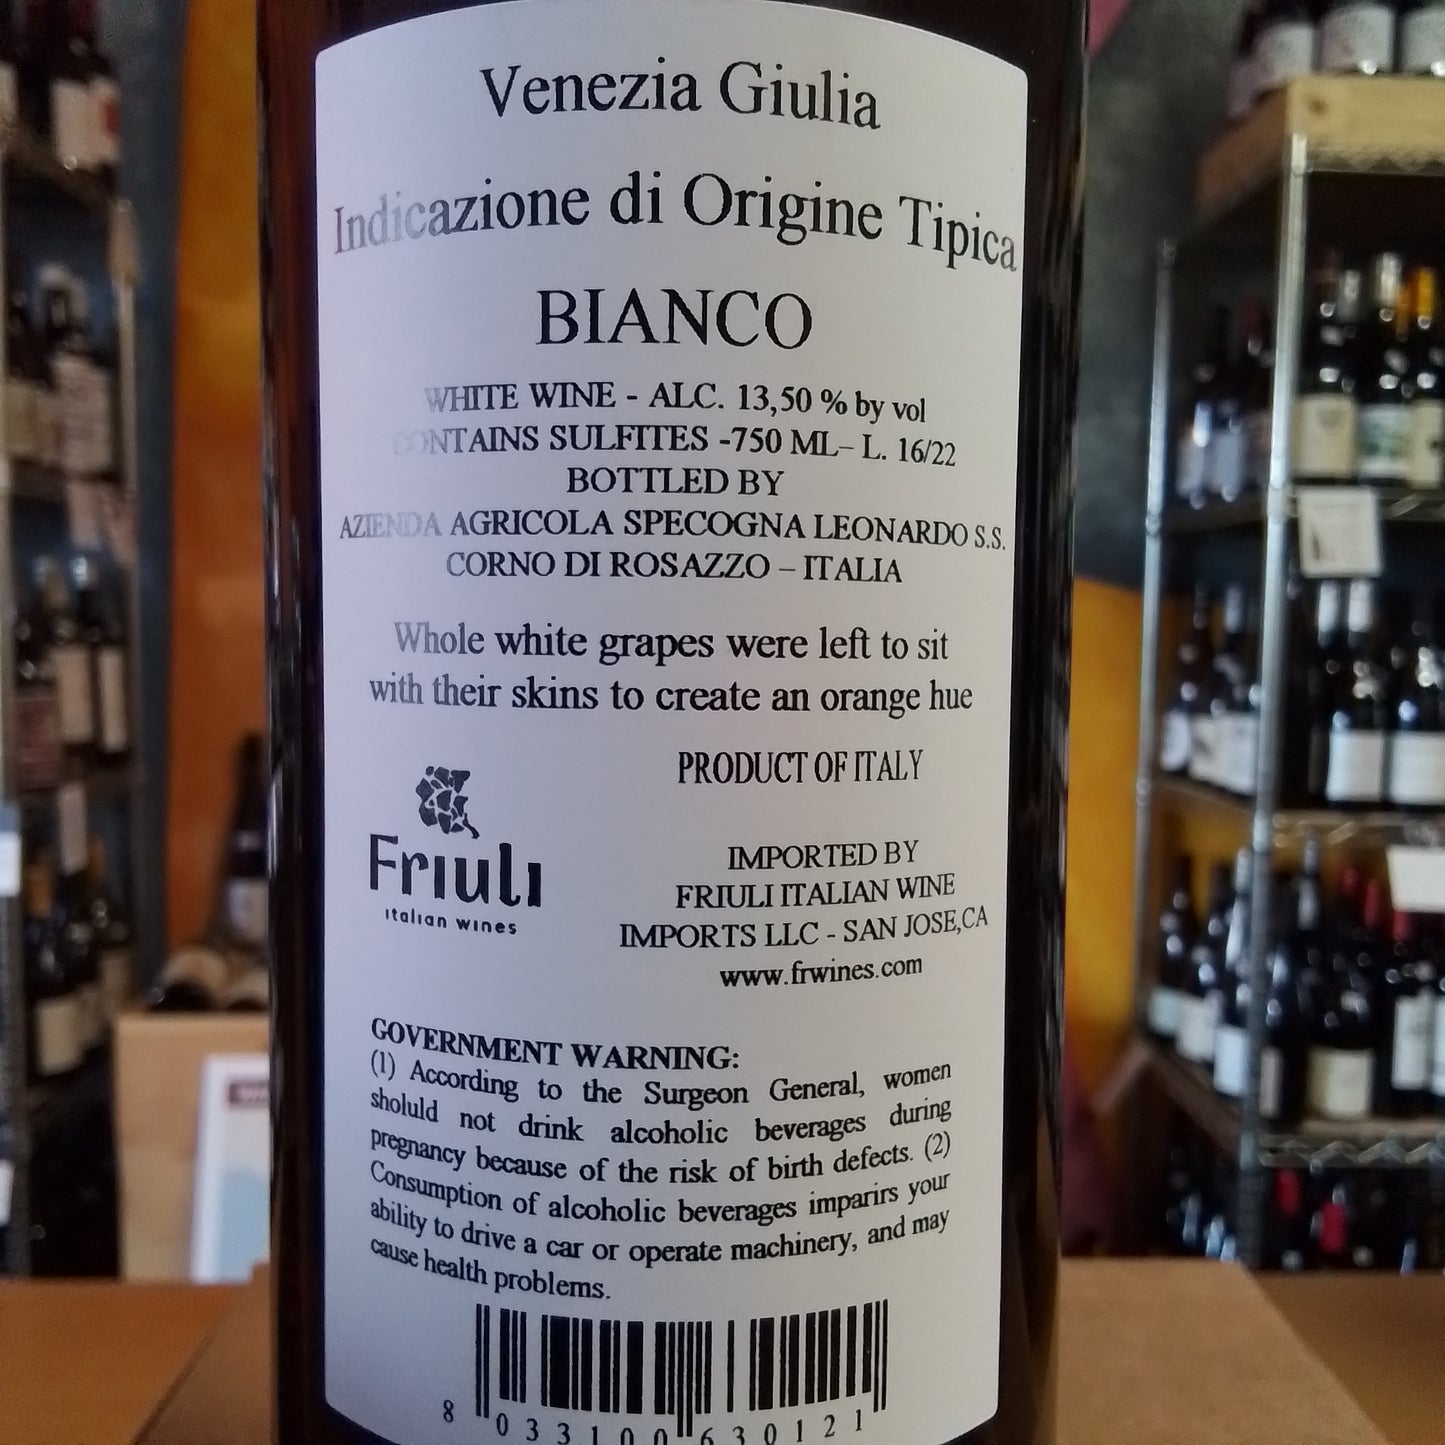 AZENDIA AGRICOLA SPECOGNA NV Traditional Skin Contact Wine 'Oranz' (Italy)